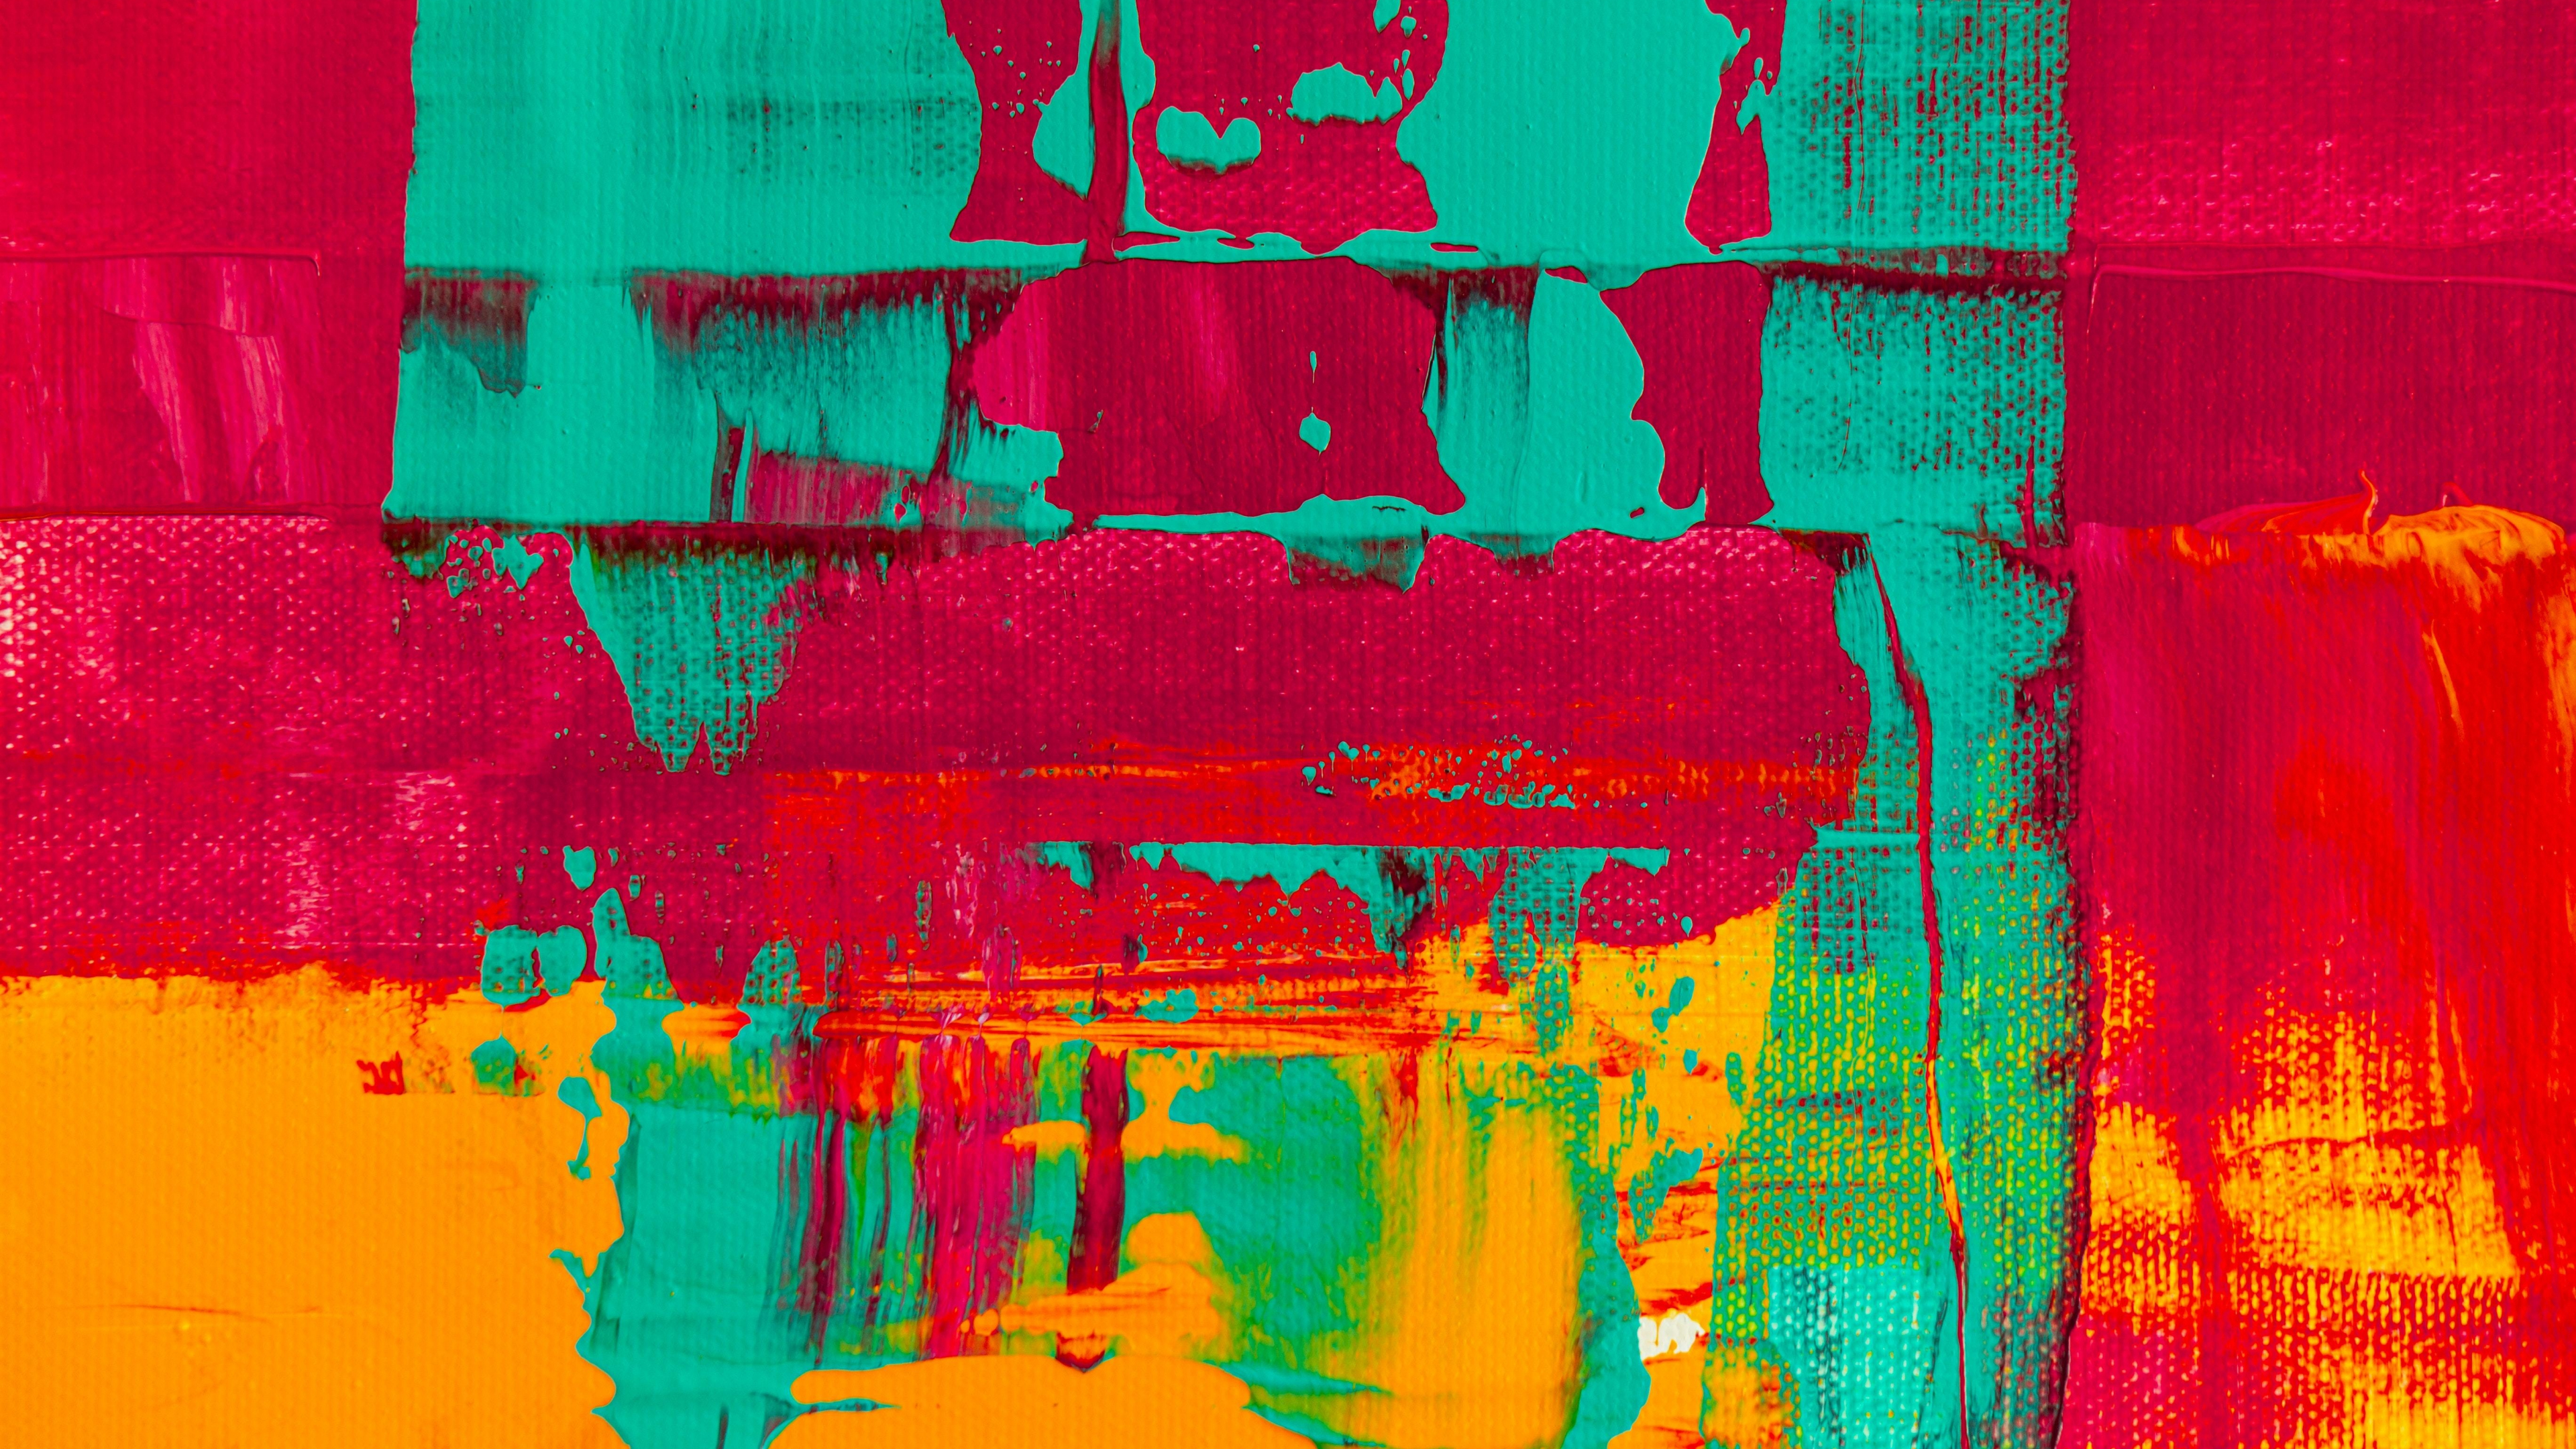 Download wallpaper 3840x2160 abstract, colorful, modern art 4k wallpaper, uhd  wallpaper, 16:9 widescreen 3840x2160 hd background, 23719